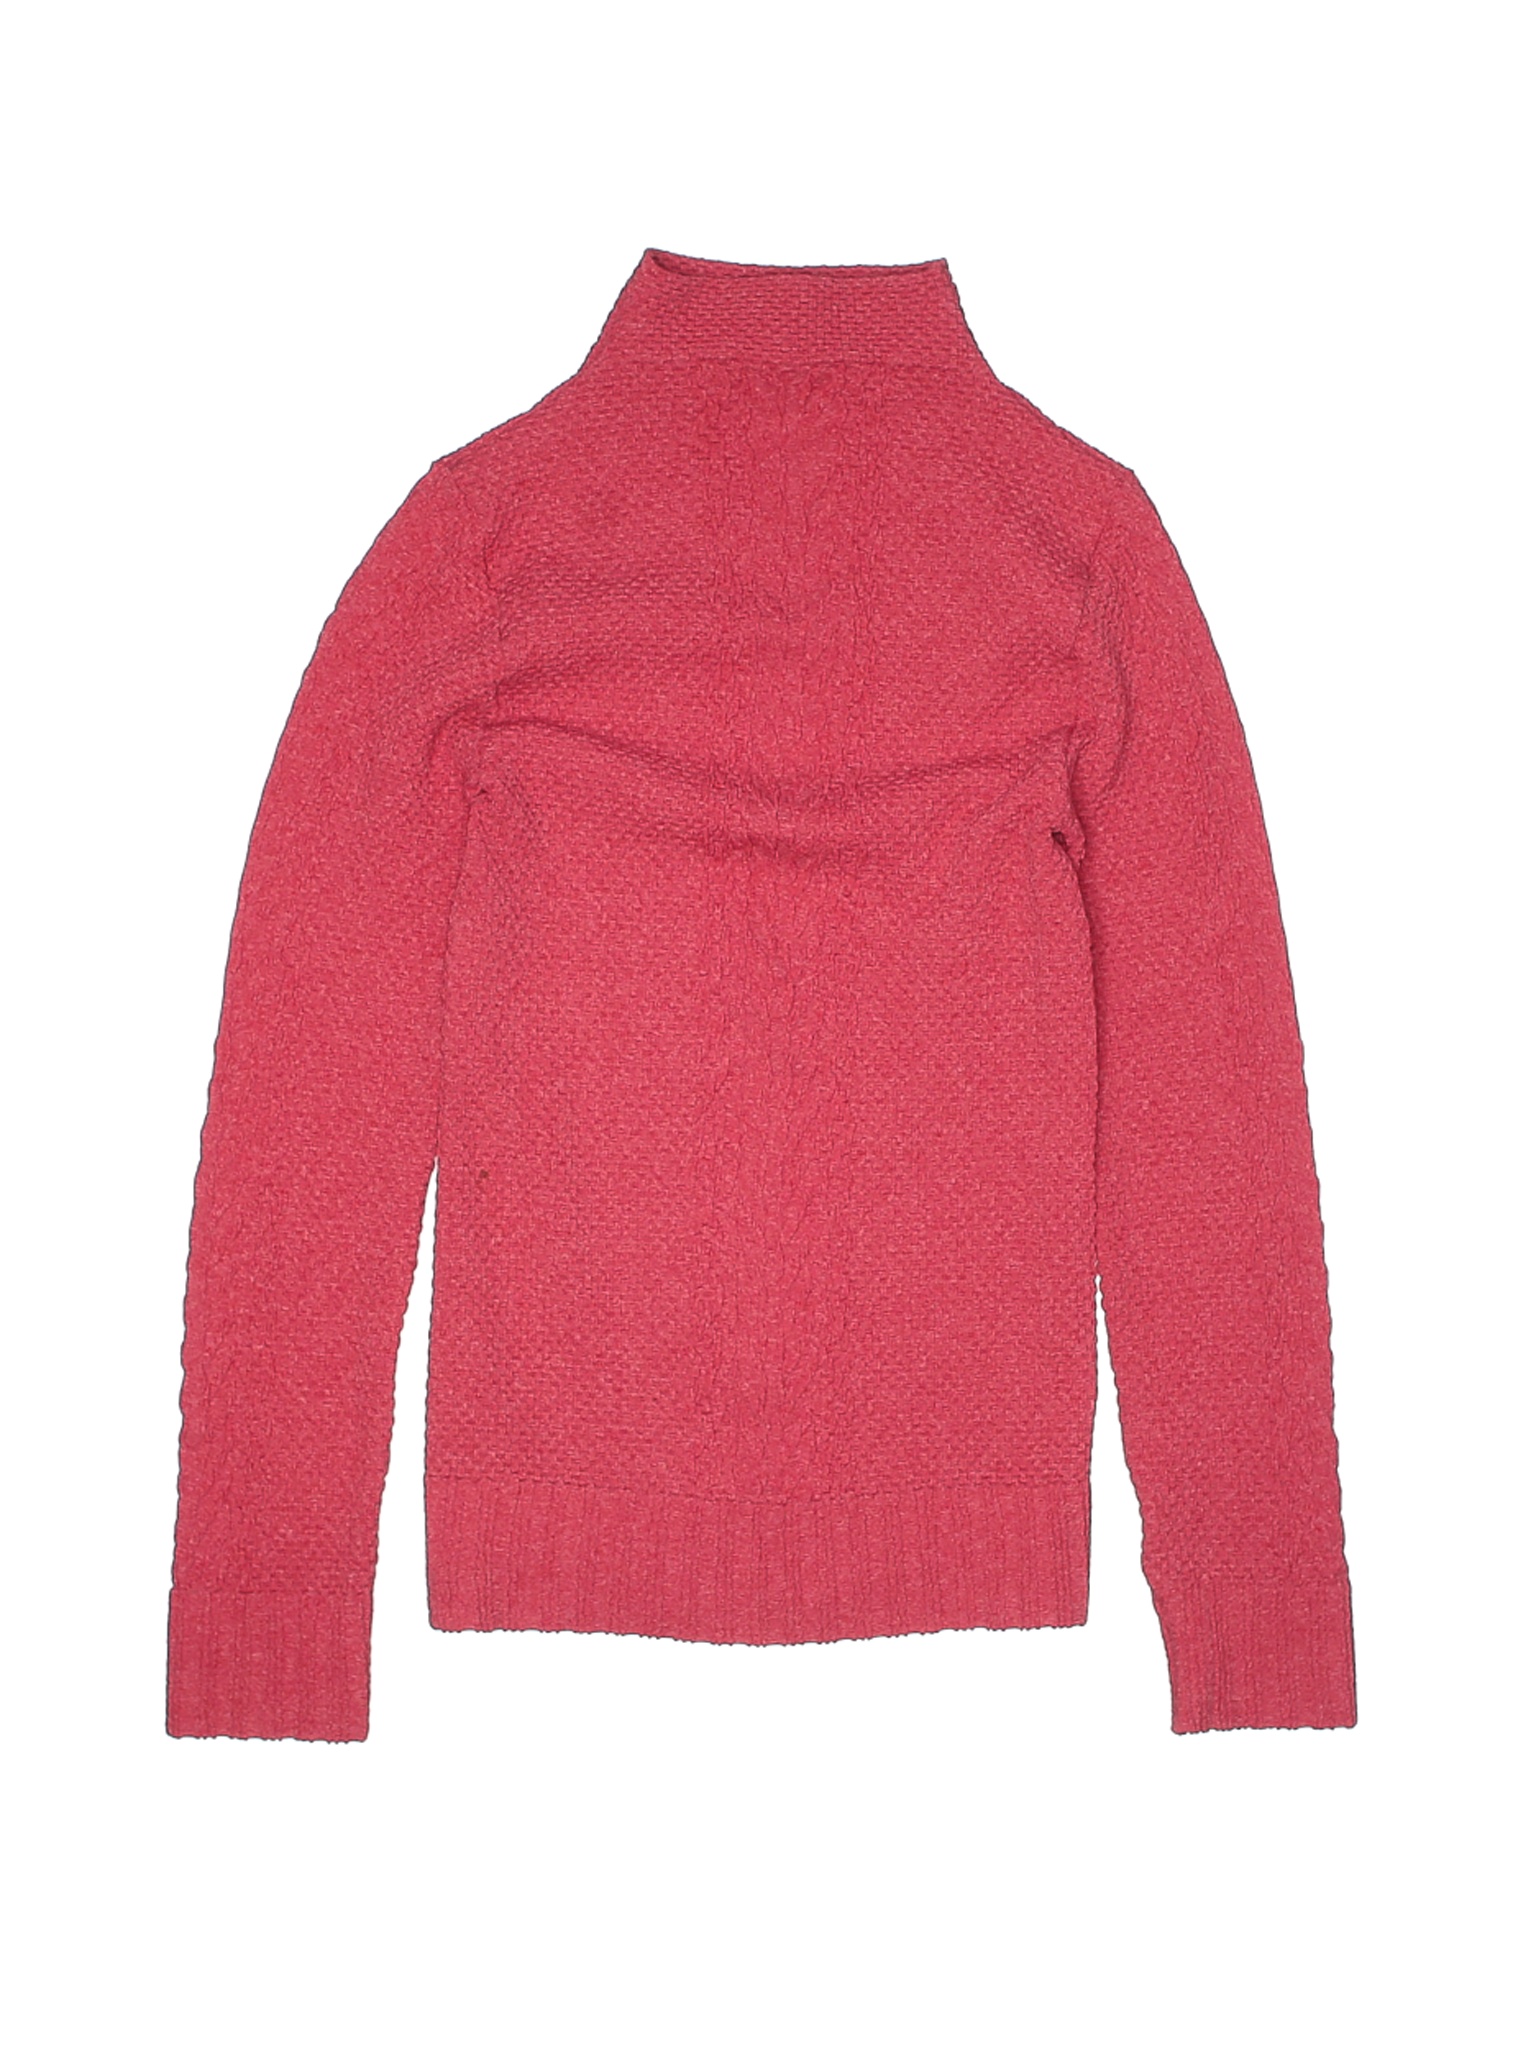 LittleSpring Little Girls Turtleneck Sweater Pullover Cable Knit